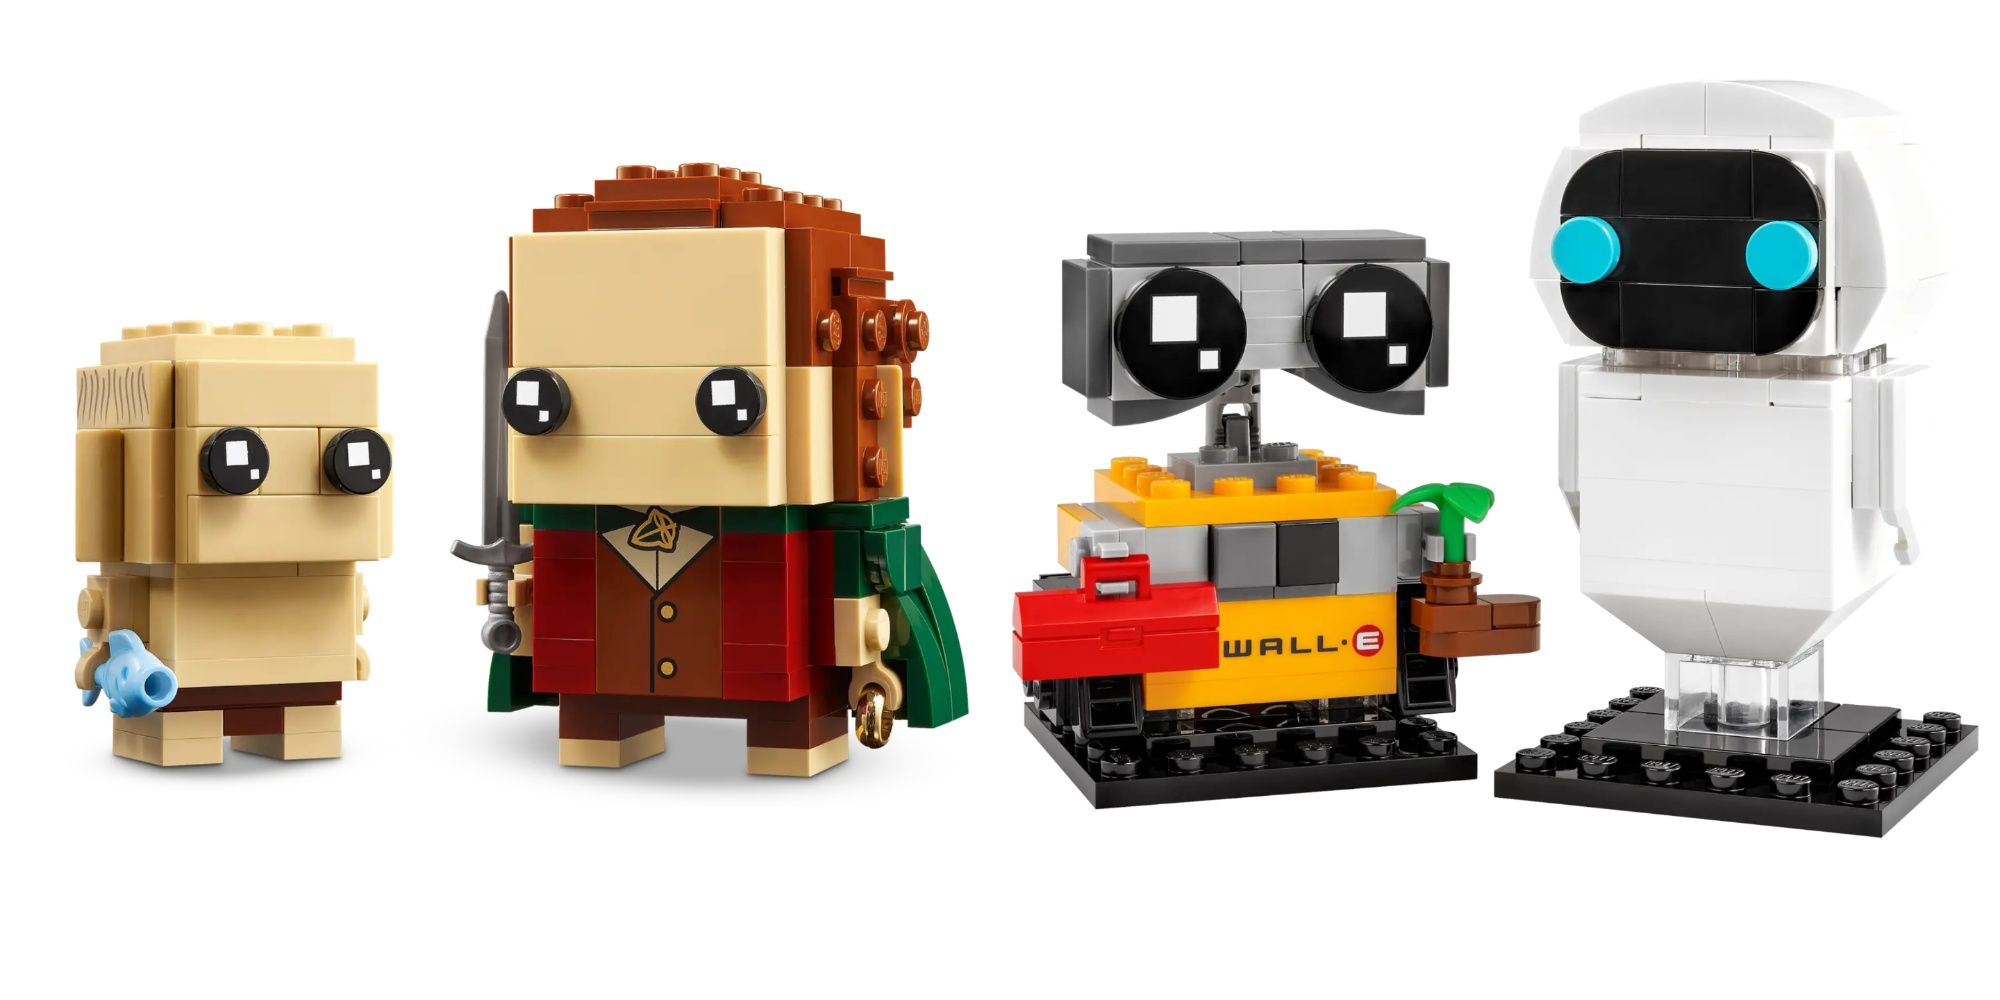 The Best Brickheadz Lego Sets Featured Split Image Of Lord Of The Rings Brickheadz and Wall-E Brickheadz